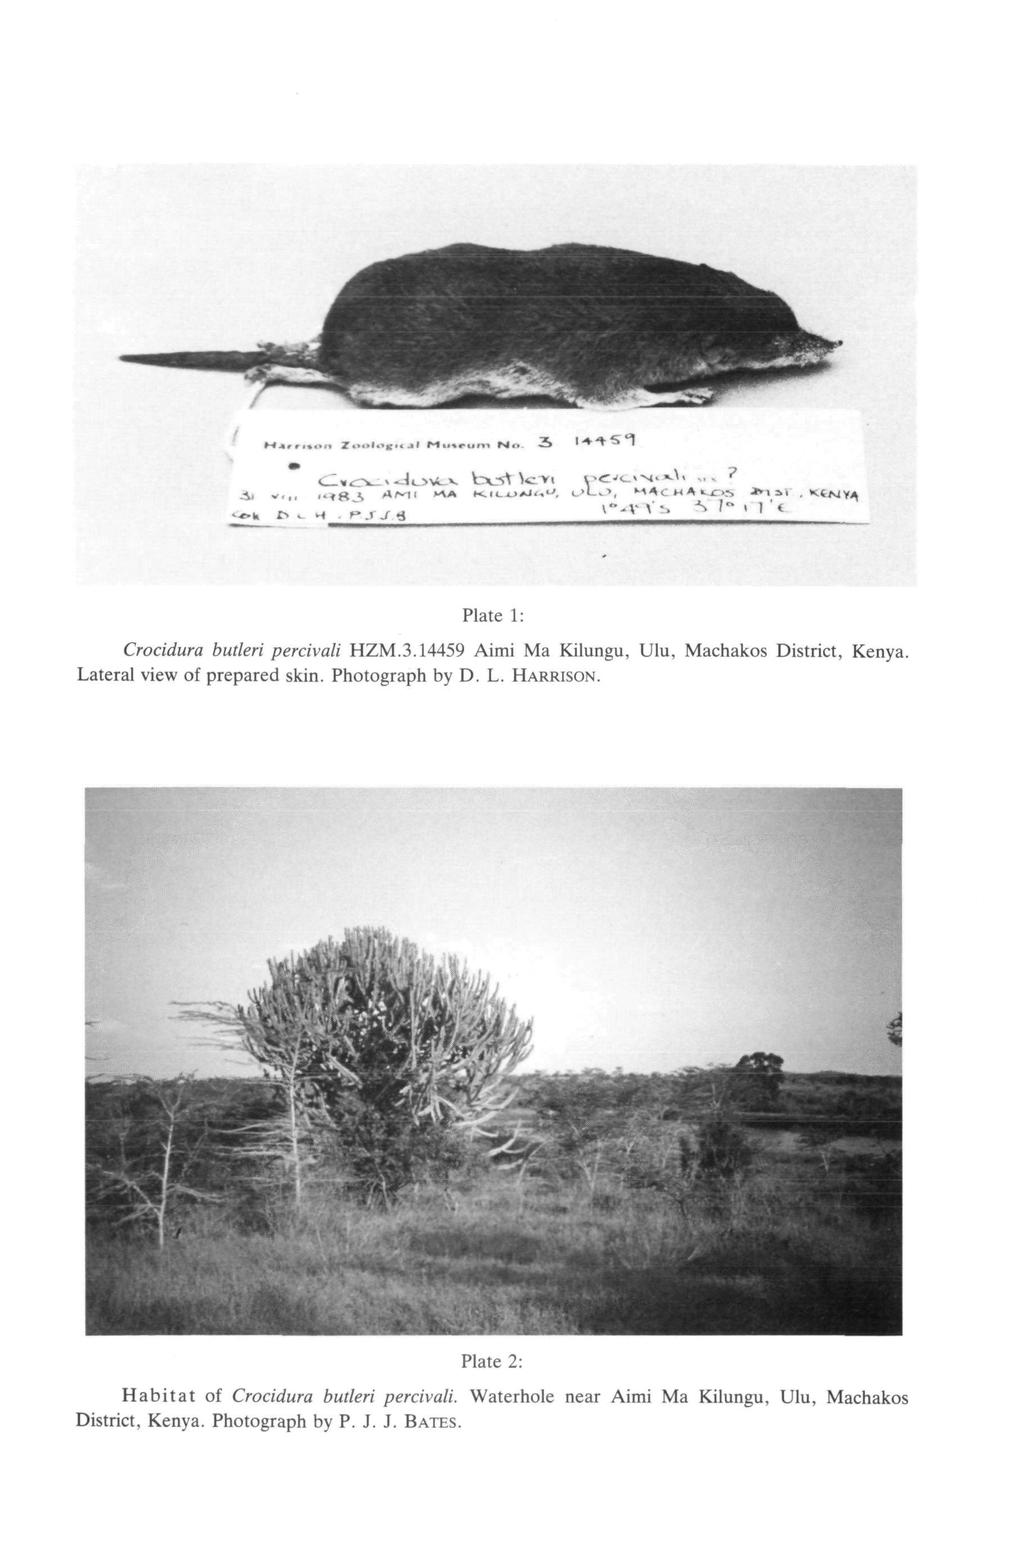 Plate 1: Crocidura butteri percivali HZM.3.14459 Aimi Ma Kilungu, Ulu, Machakos District, Kenya. Lateral view of prepared skin. Photograph by D. L. HARRISON.